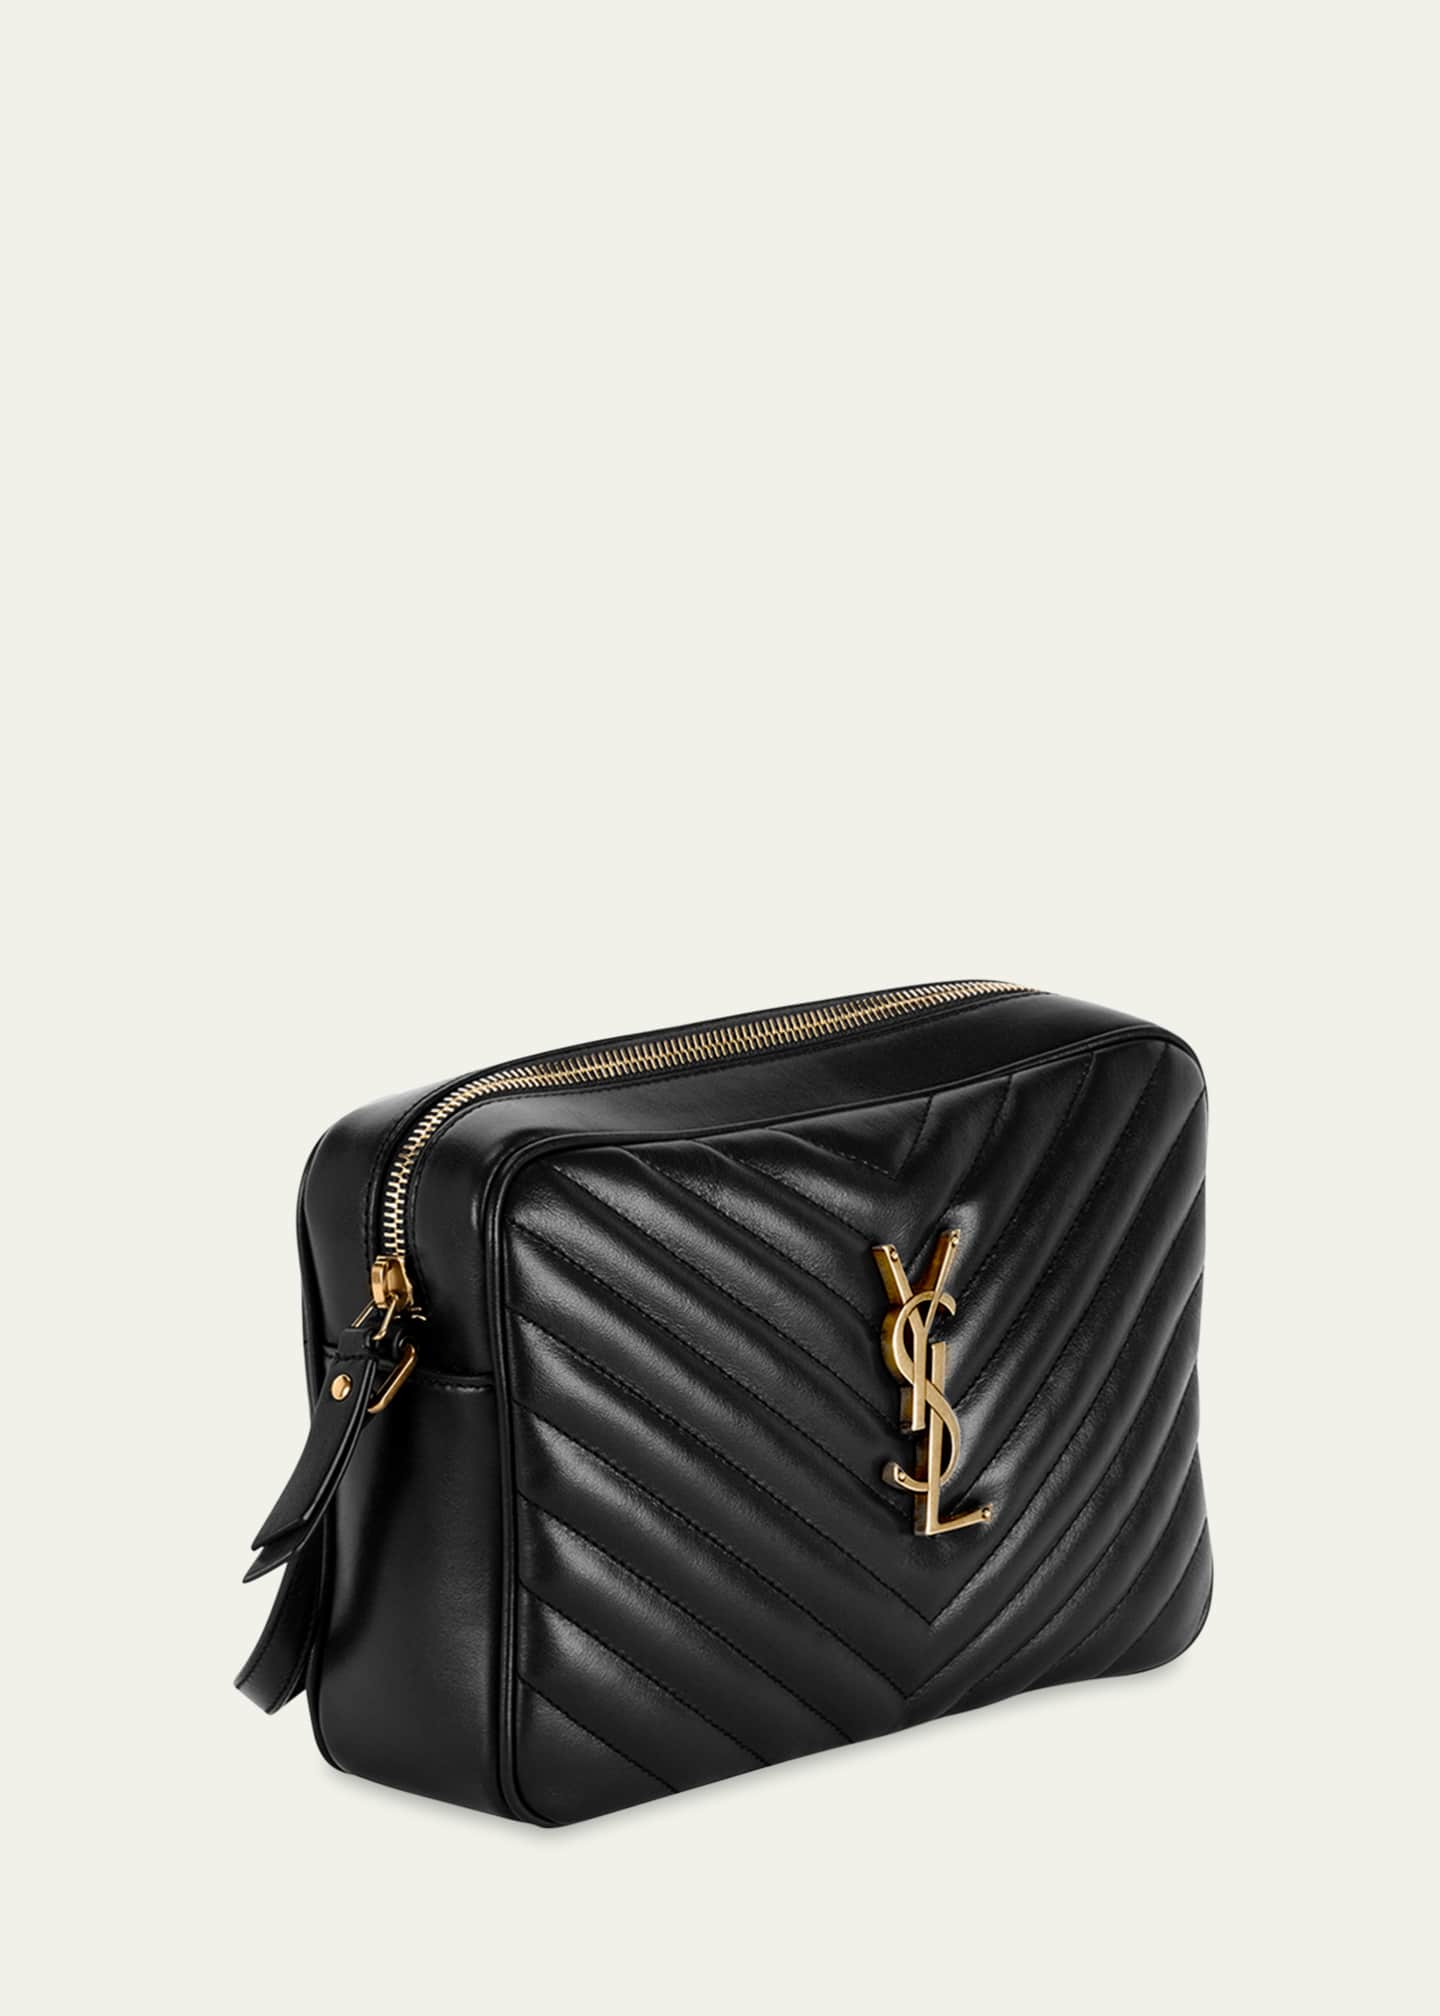 Need advice) thoughts on the SAINT LAURENT Le Monogramme mini leather camera  bag? : r/handbags